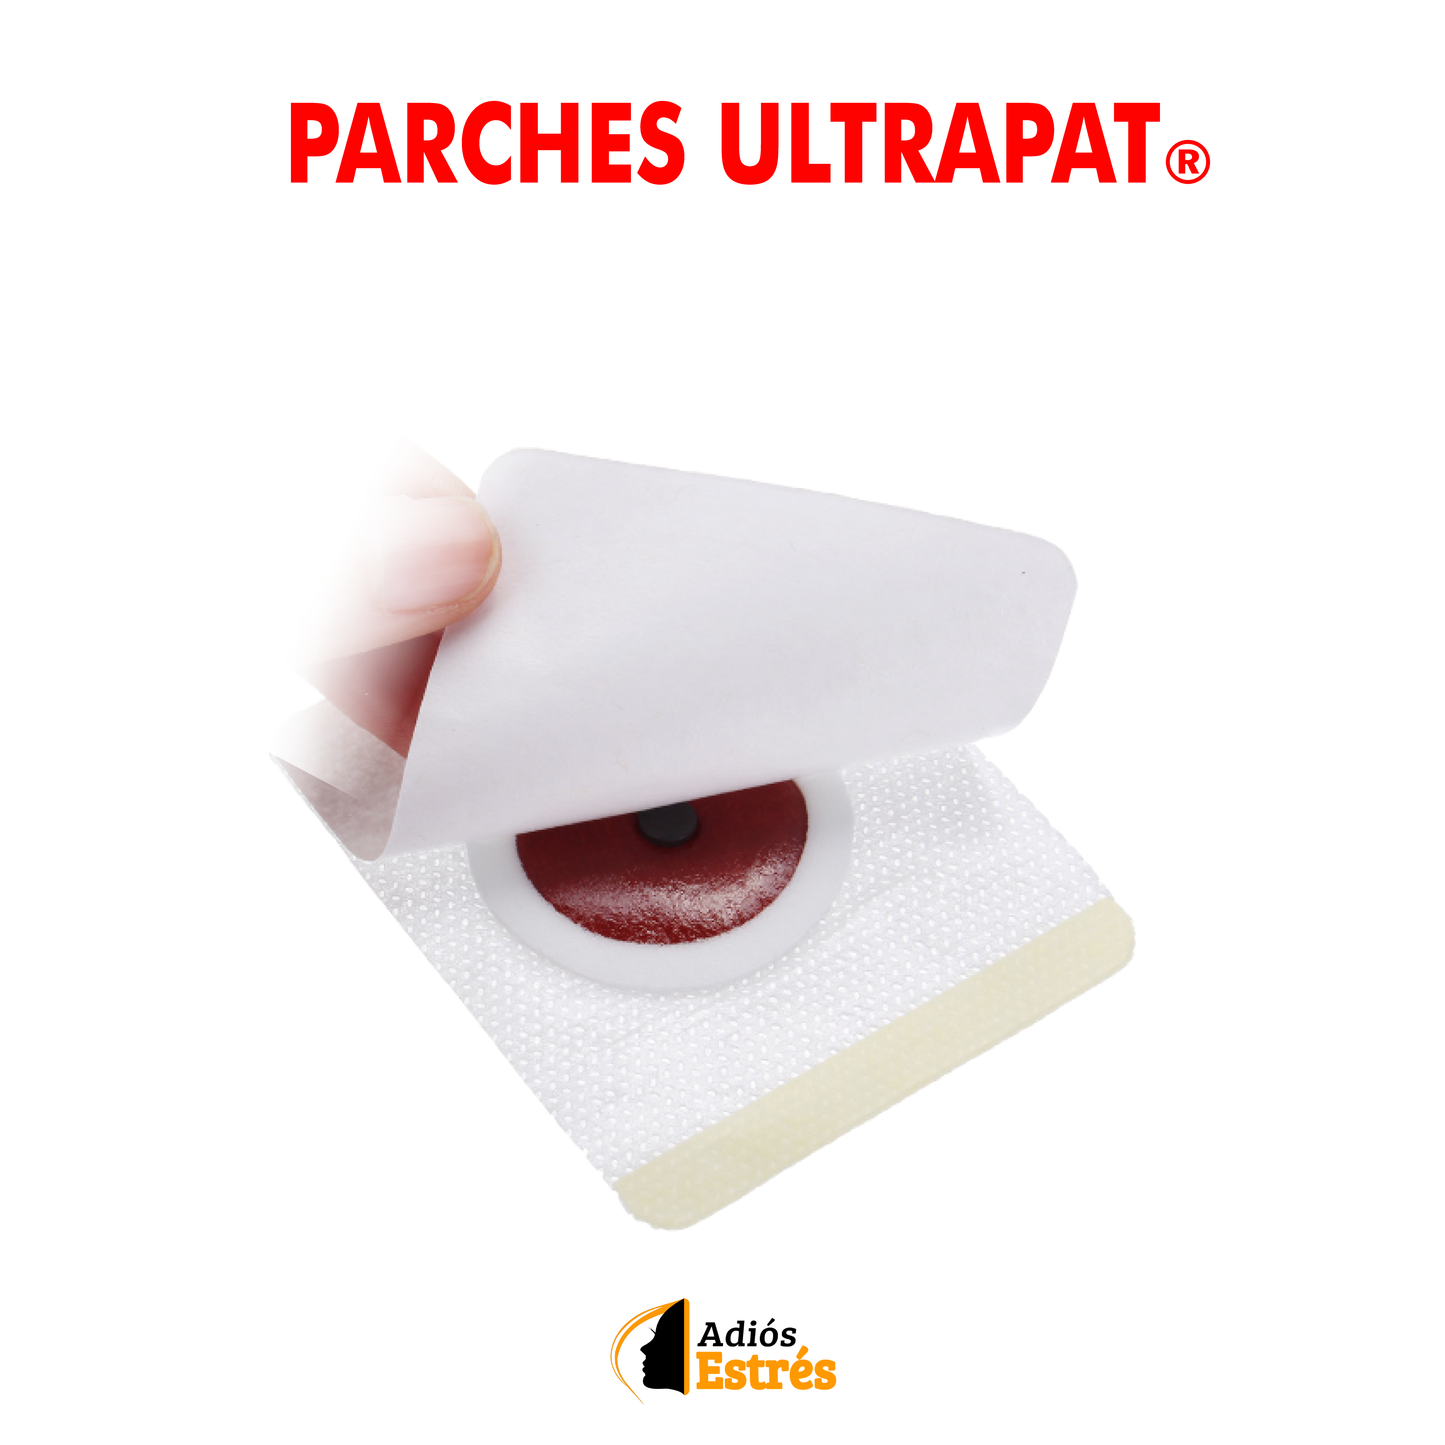 Parches Ultrapad®